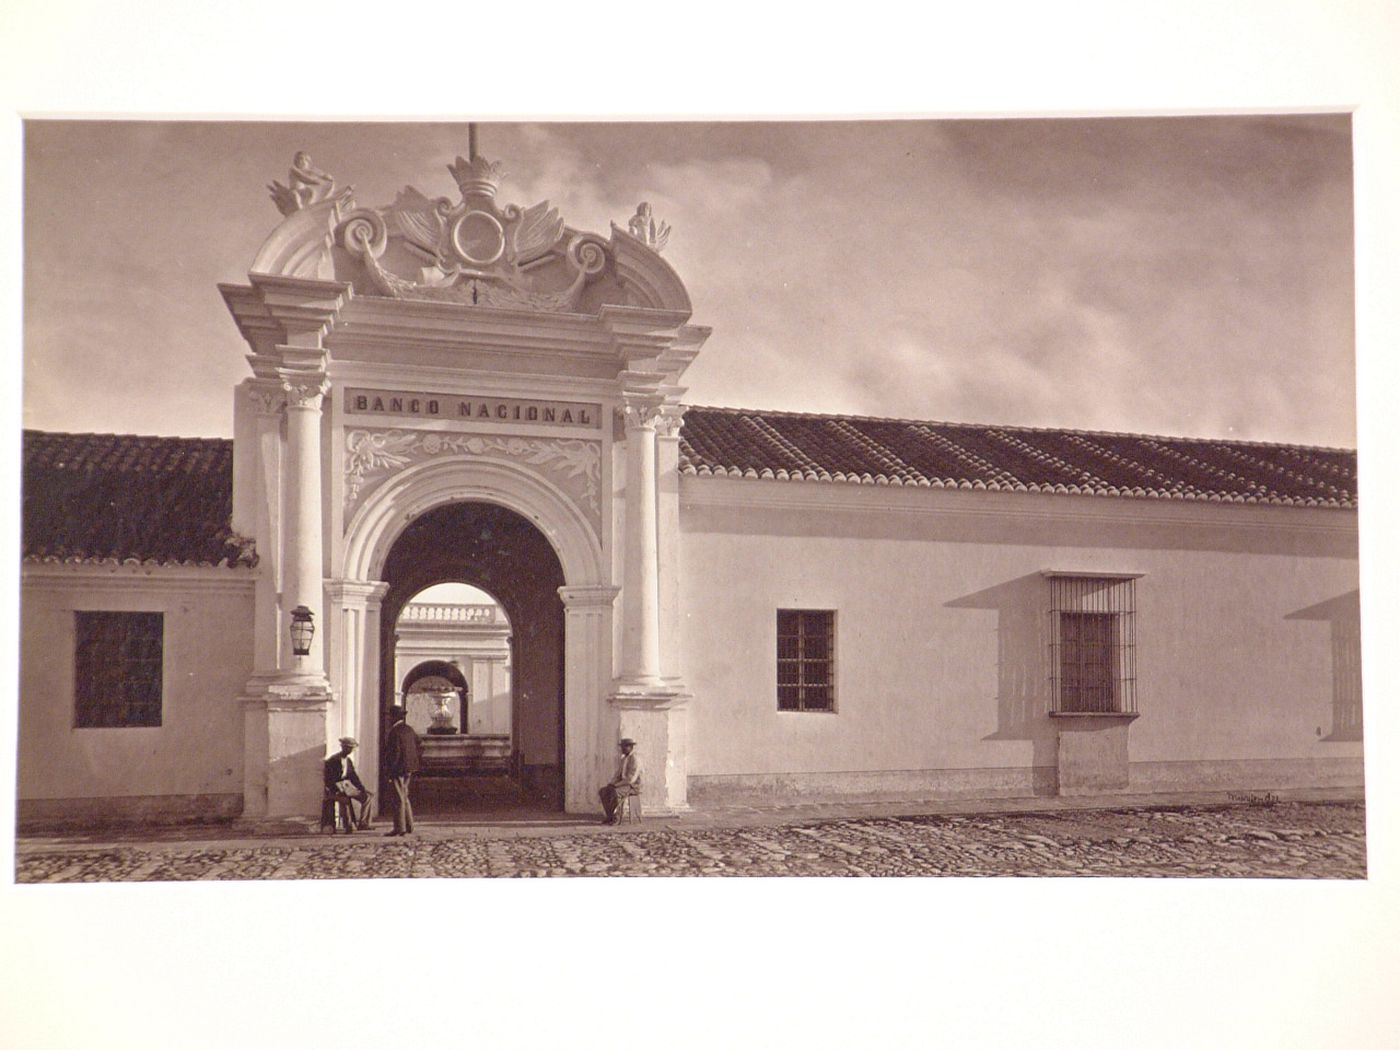 Banco National, exterior view of wall and entrance to courtyard, Guatemala City, Guatemala